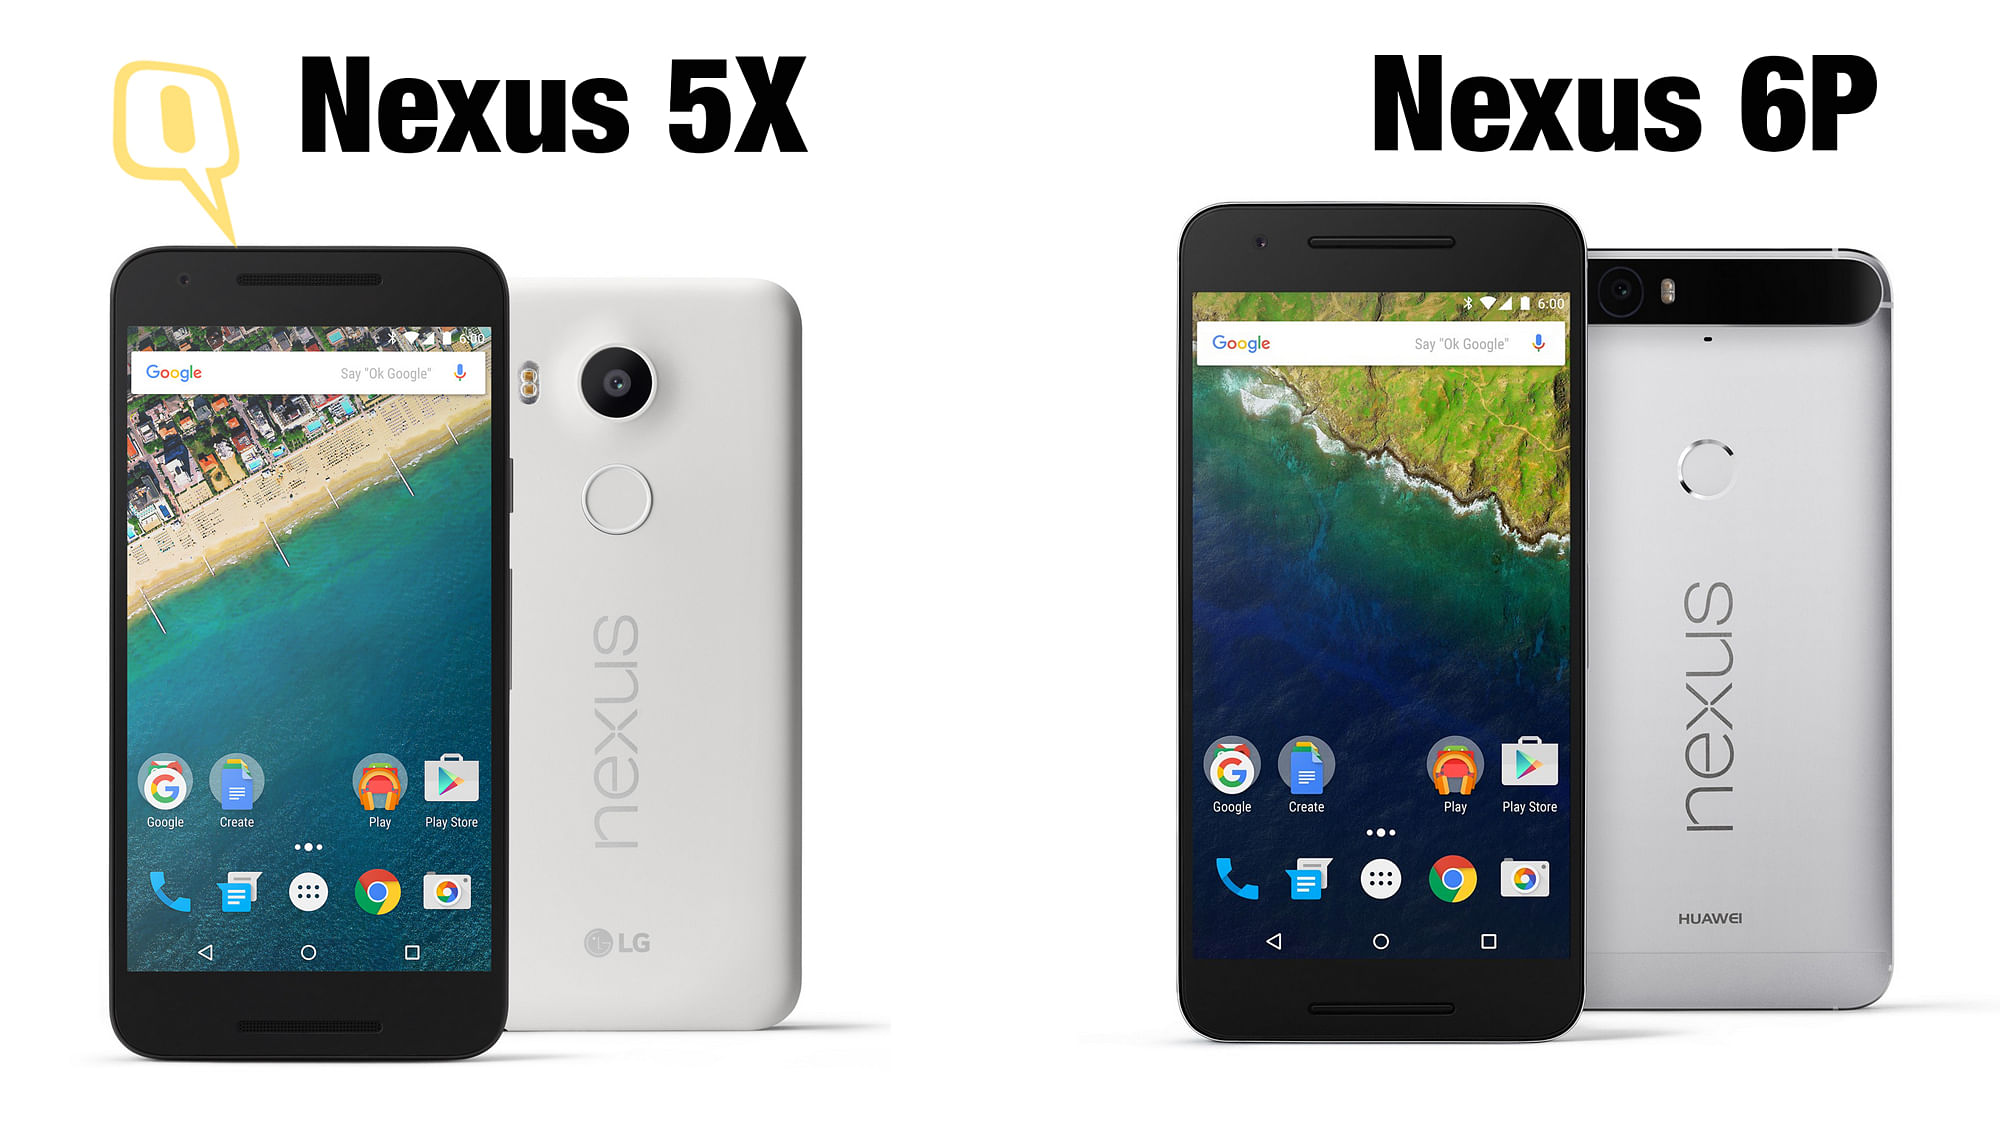 Google Nexus 5X and Google Nexus 5P.